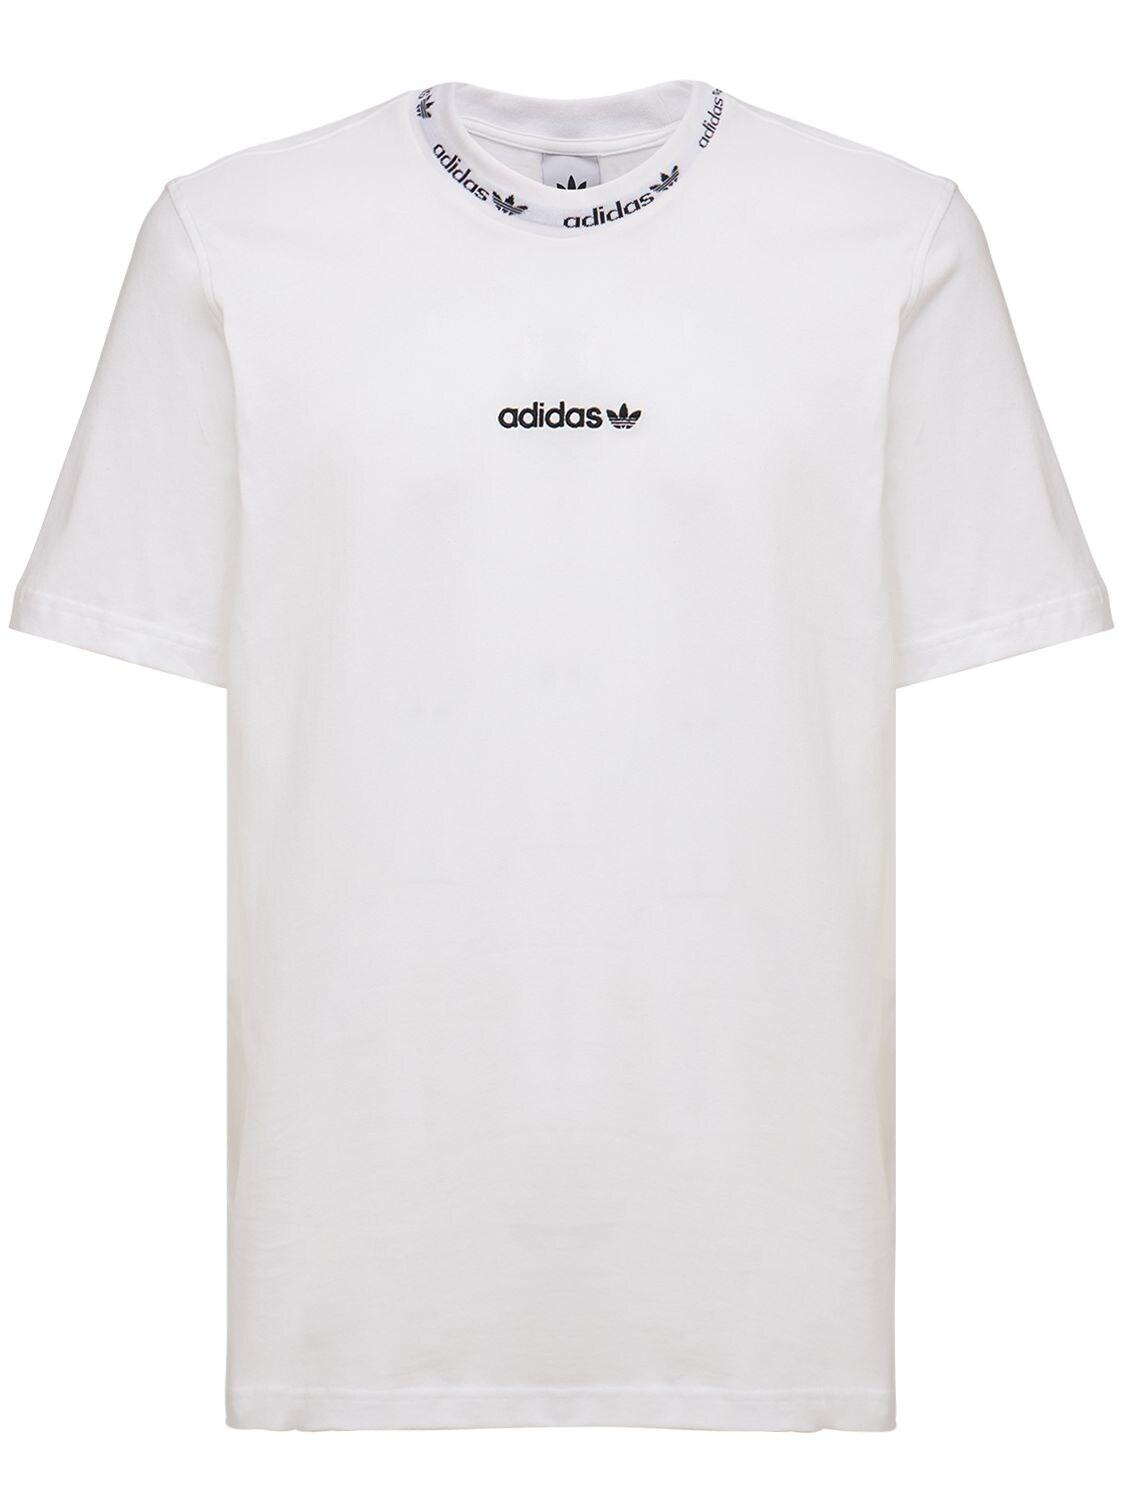 adidas Originals Trefoil Linear Cotton T-shirt in White for Men | Lyst